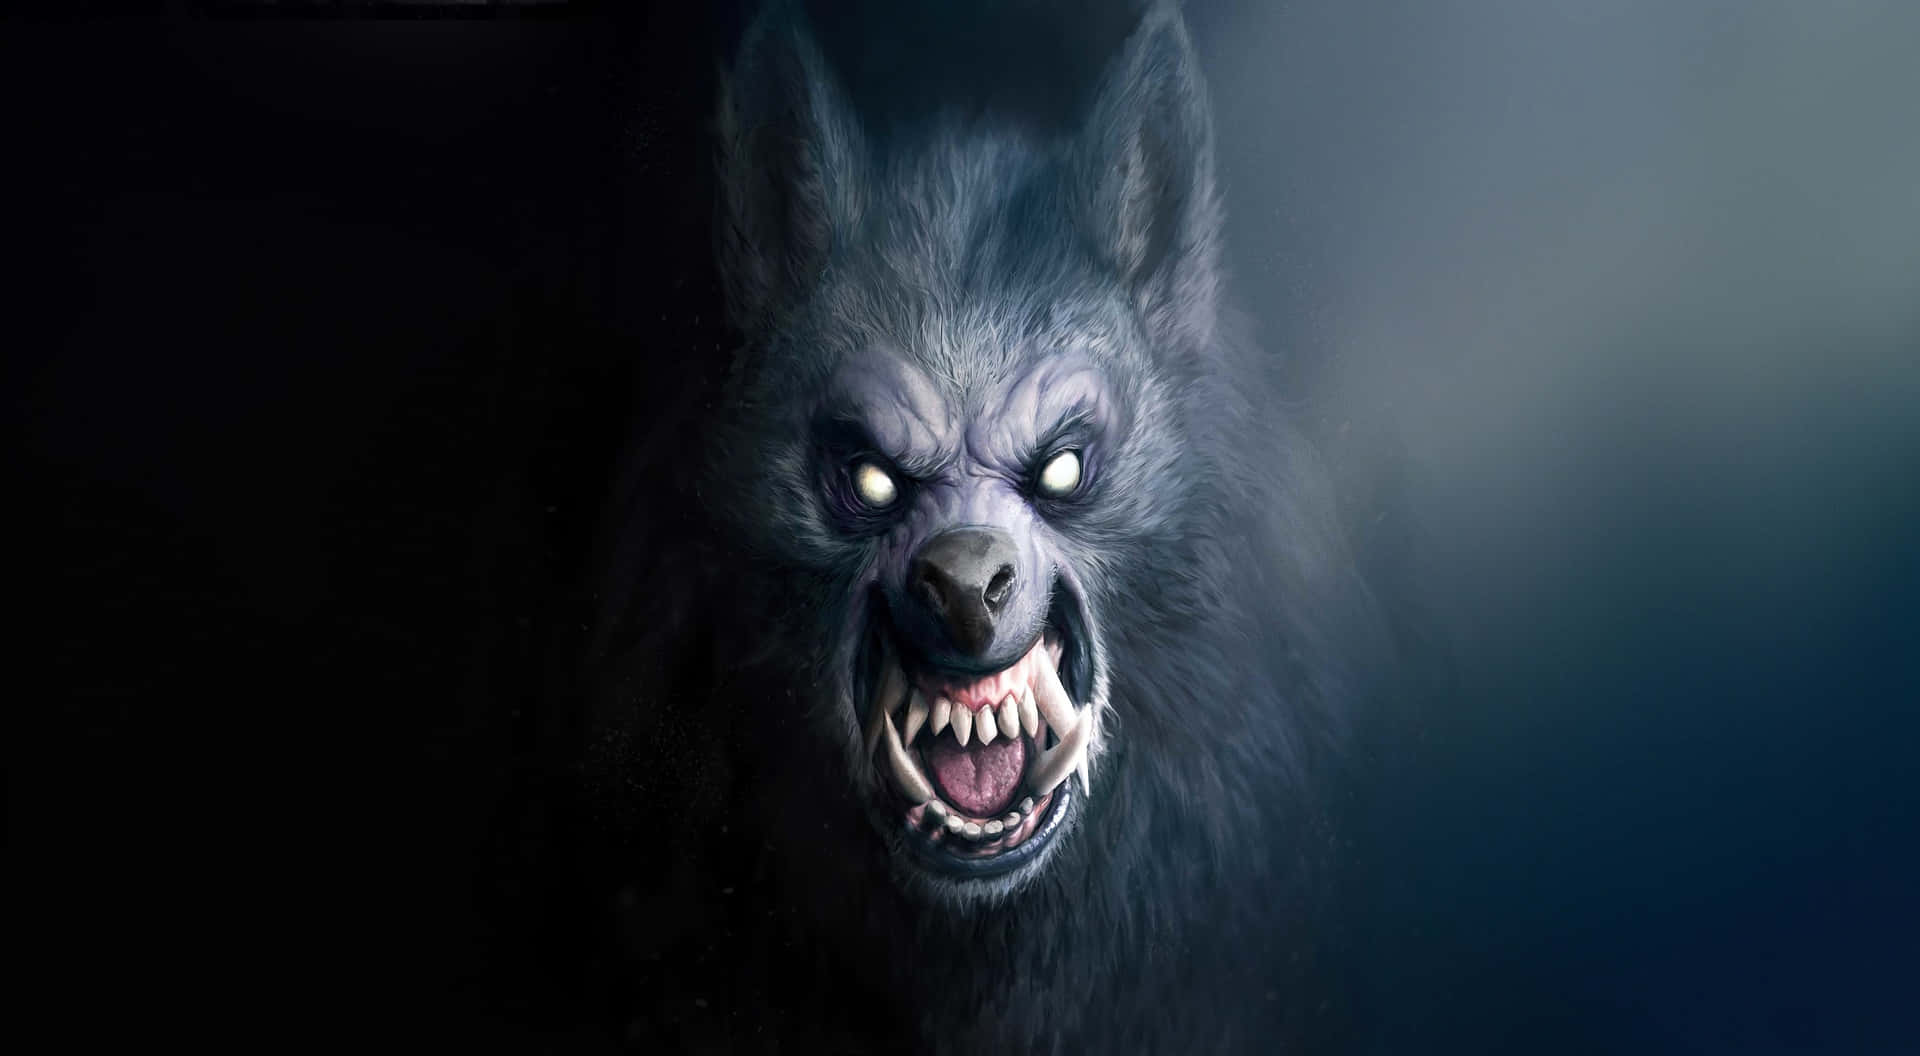 A WereWolf howling at a full moon